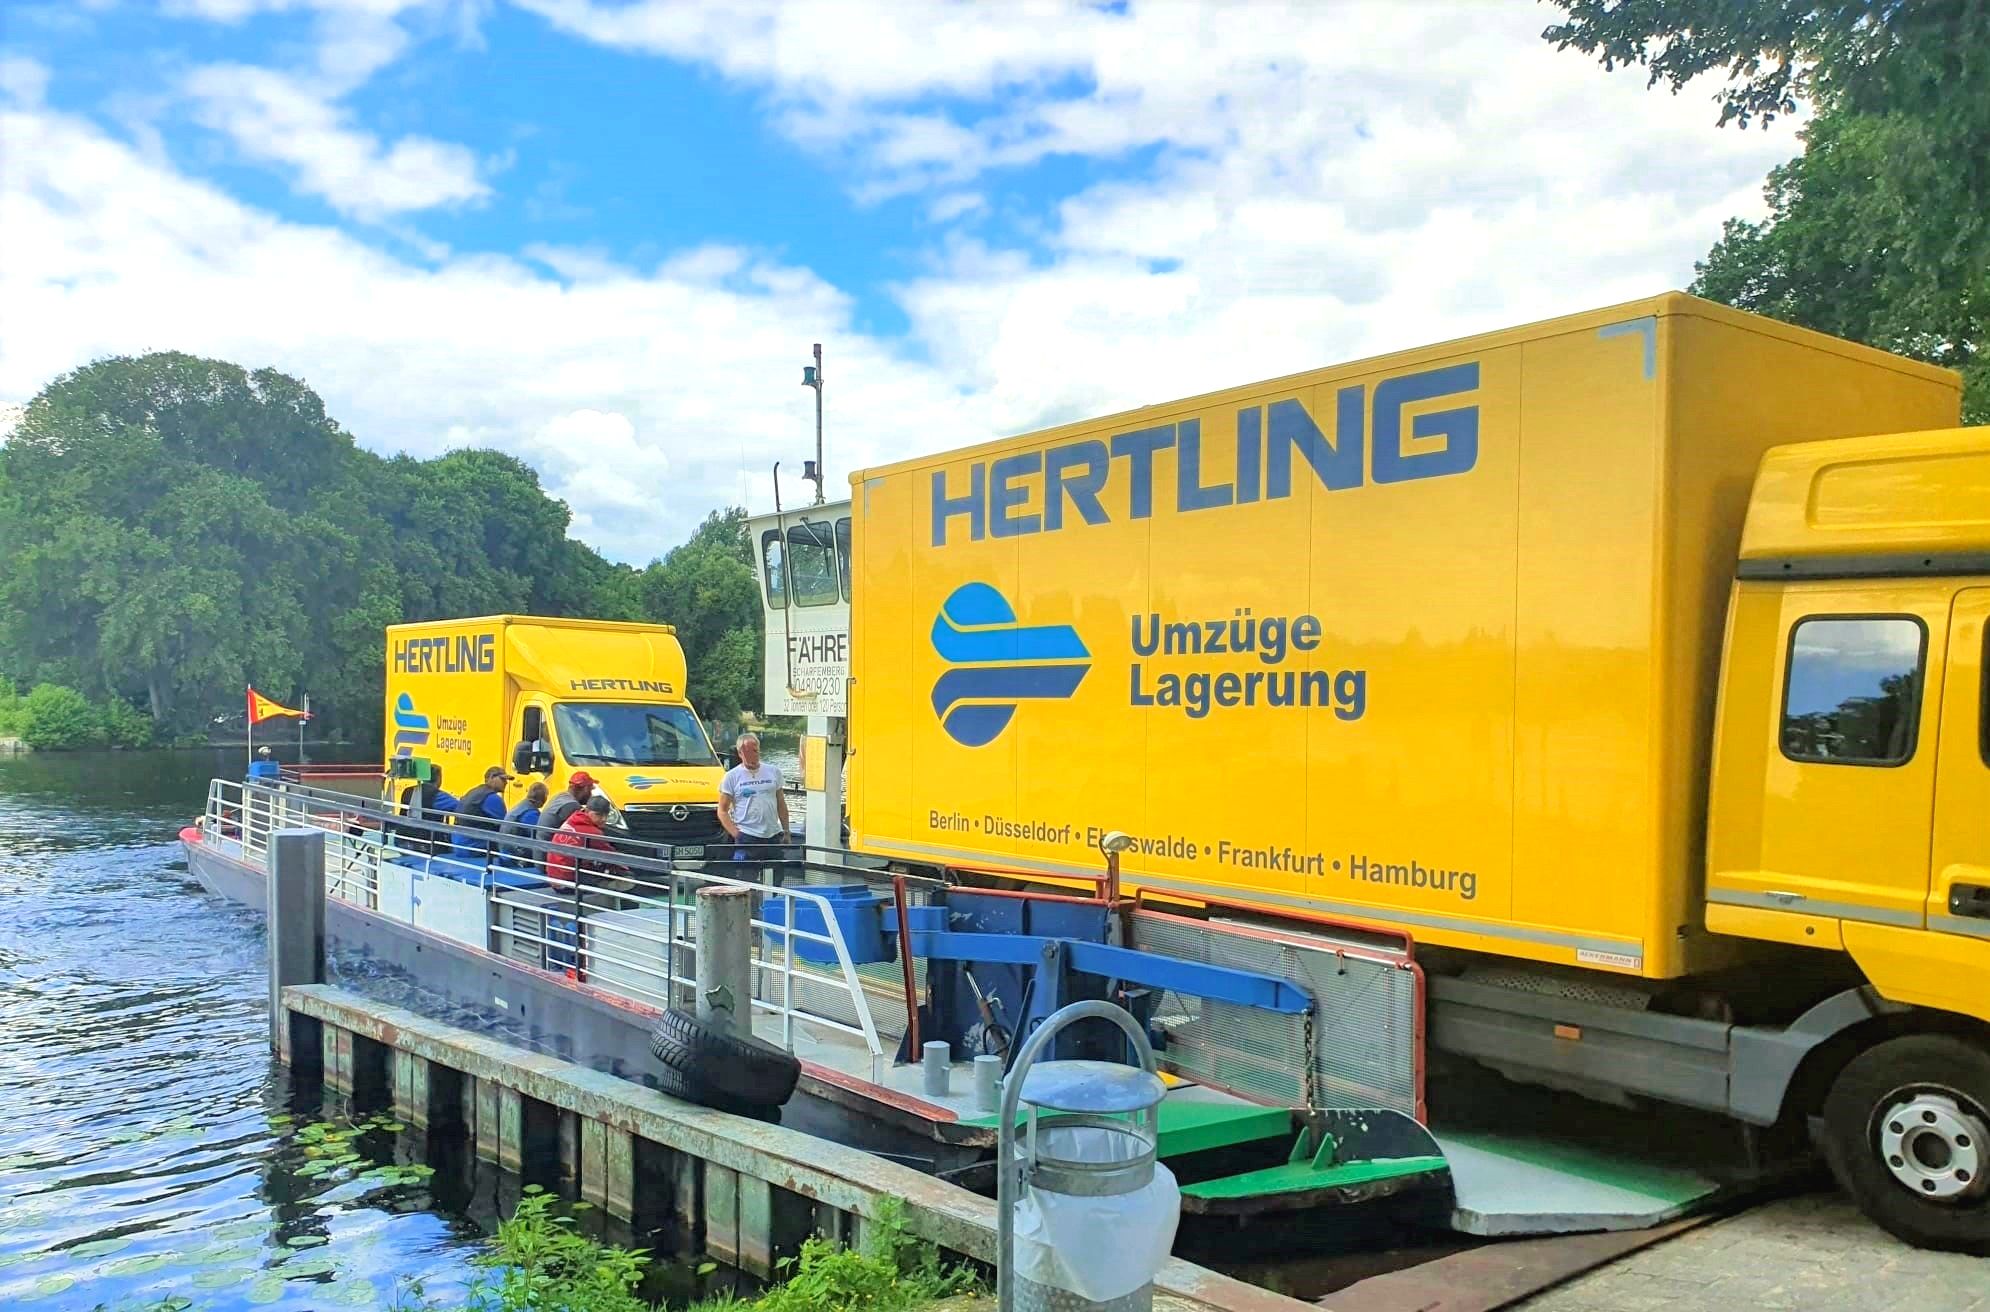 HERTLING Umzug über den See in Berlin